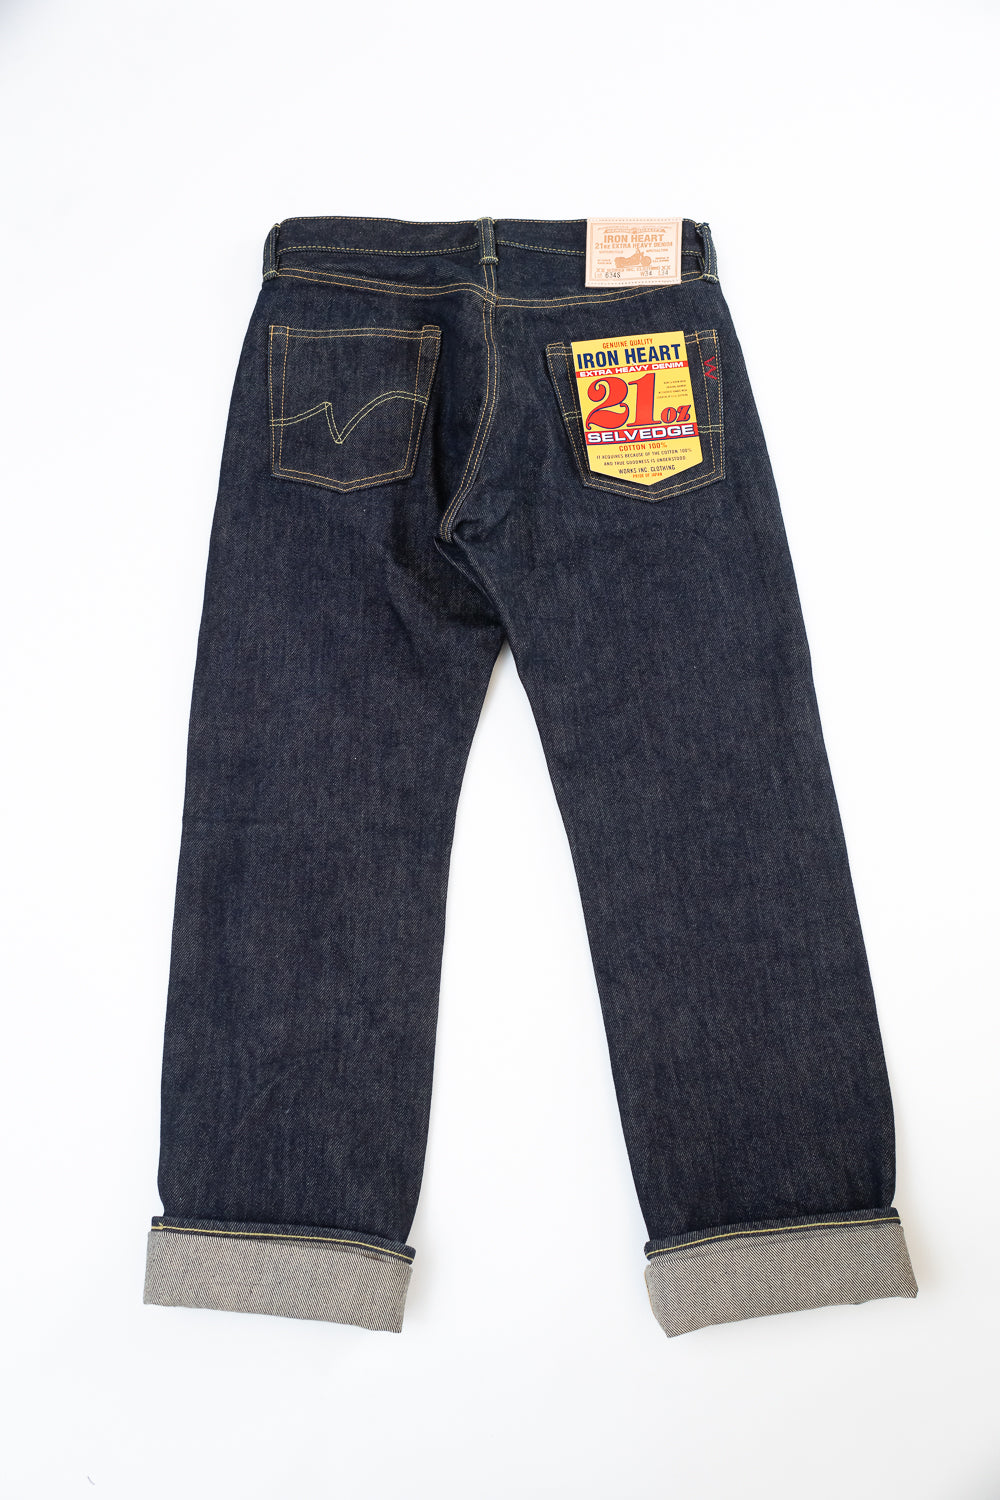 Iron Heart 634s 21oz Selvedge Jeans - Classic Straight